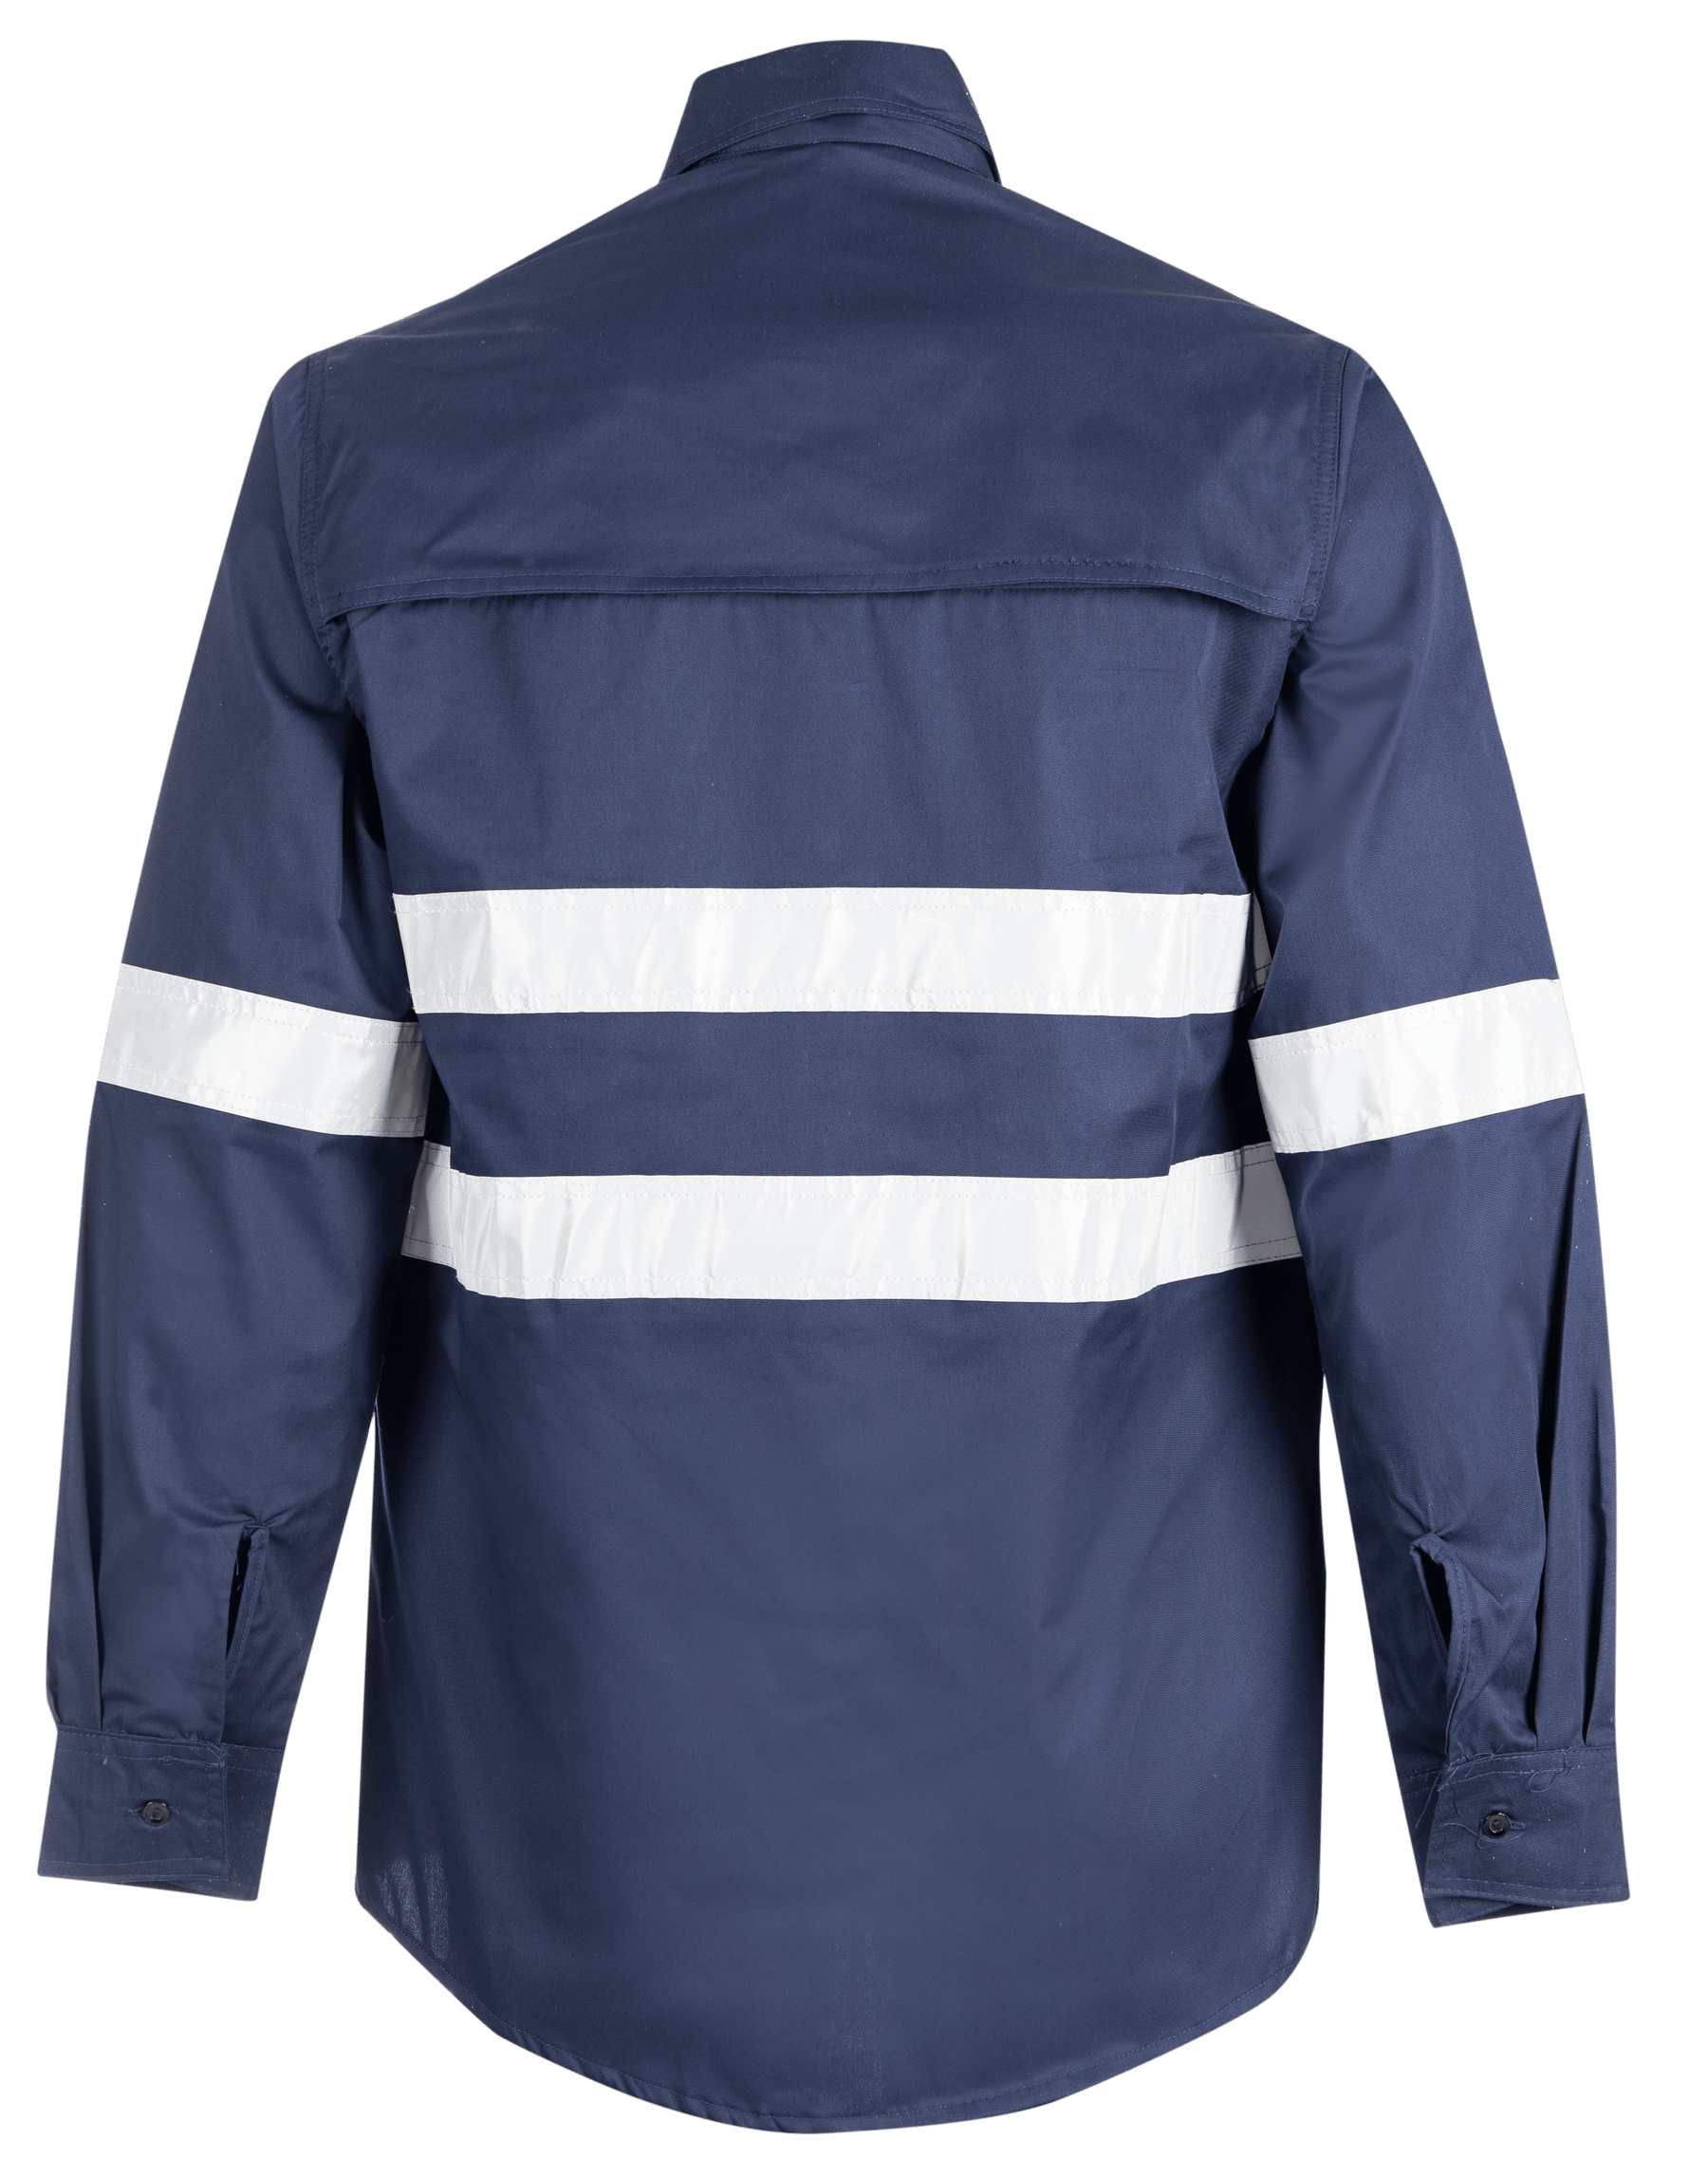 Reflective Shirt - Polycotton Navy